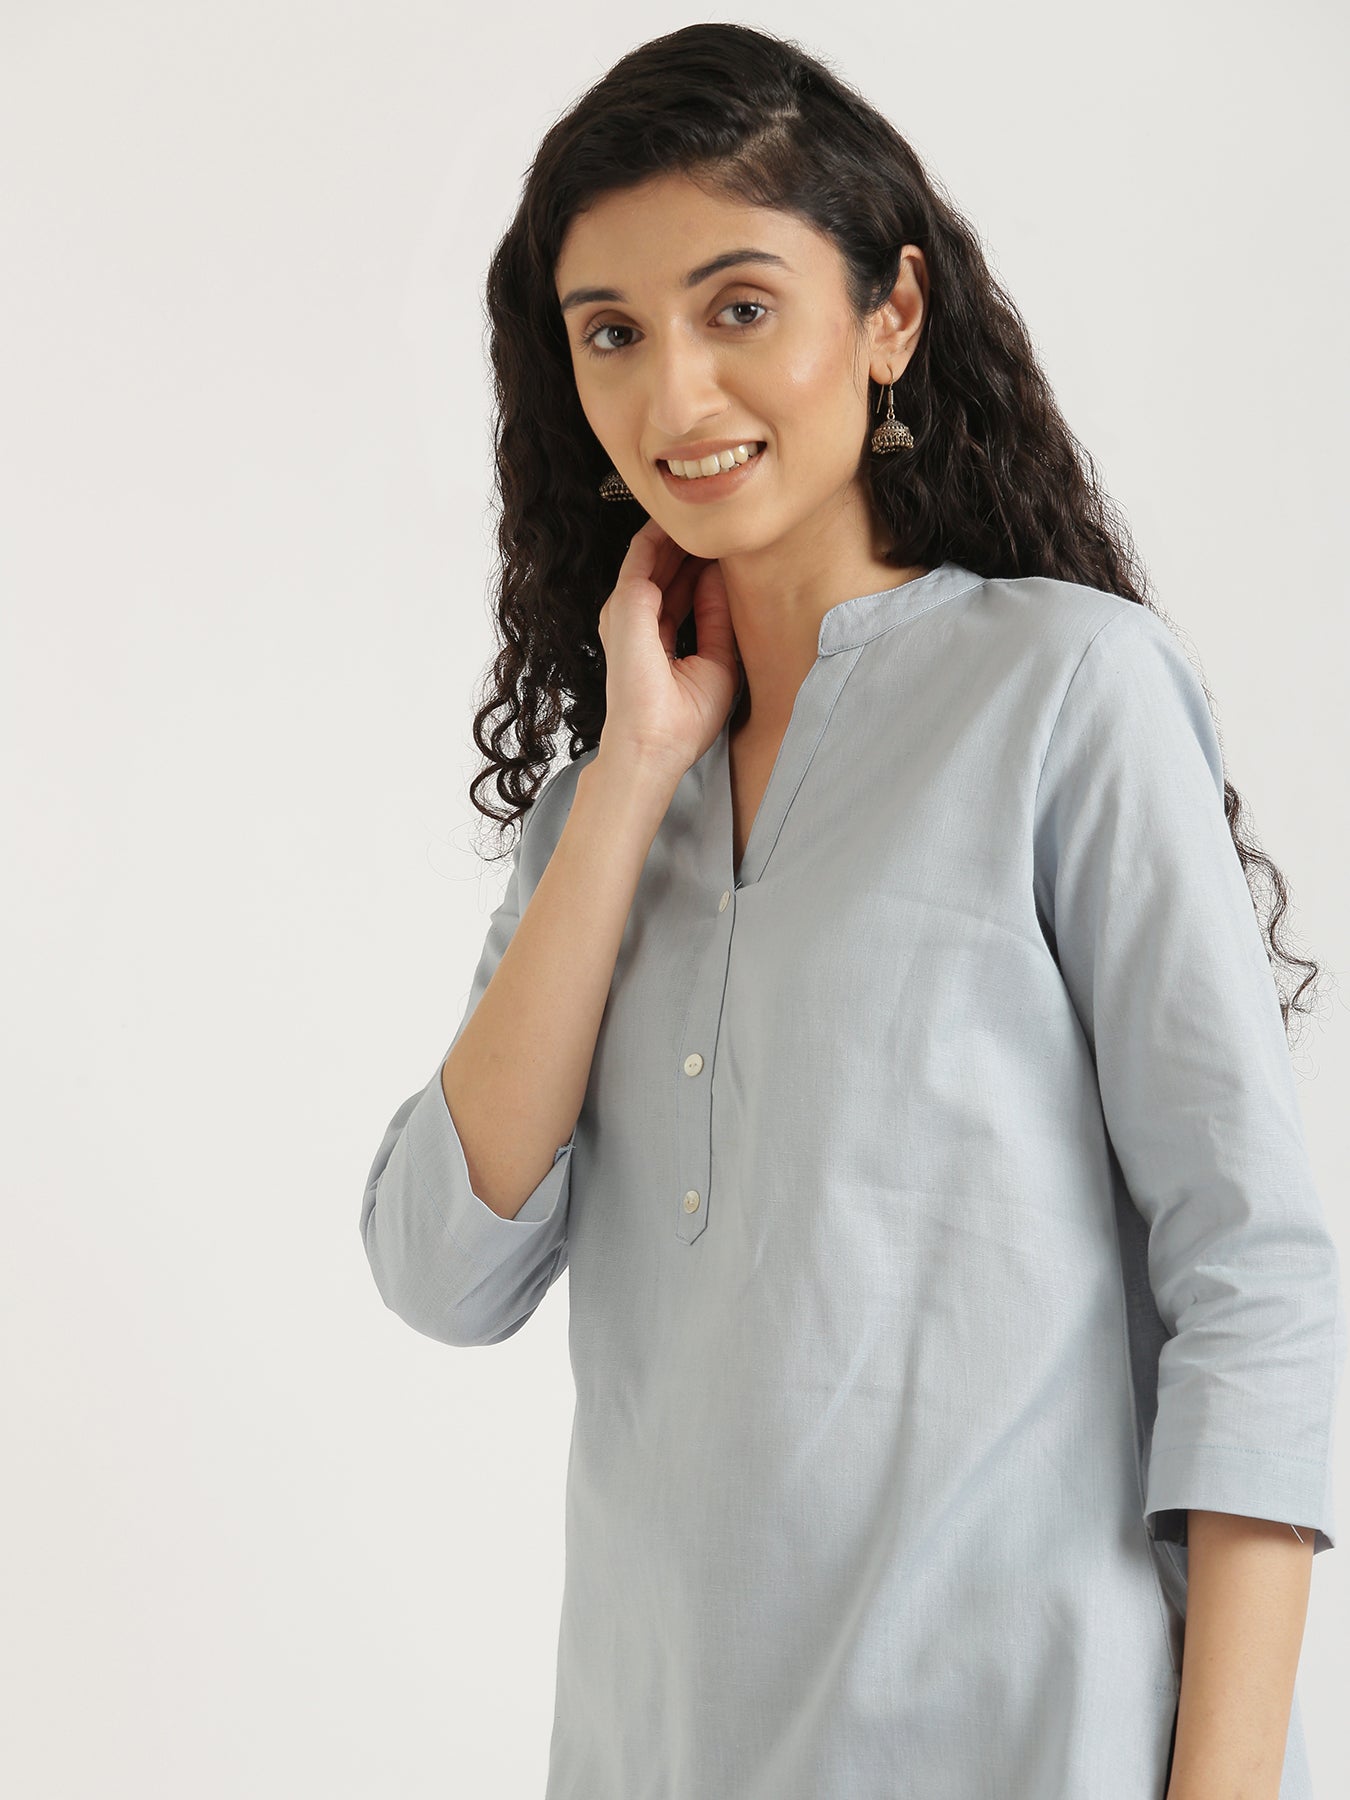 elara Black Short Kurti for Women for Jeans 3/4 Sleeveless Cotton Printed  Tops Under 500 (Small) : Amazon.in: Fashion